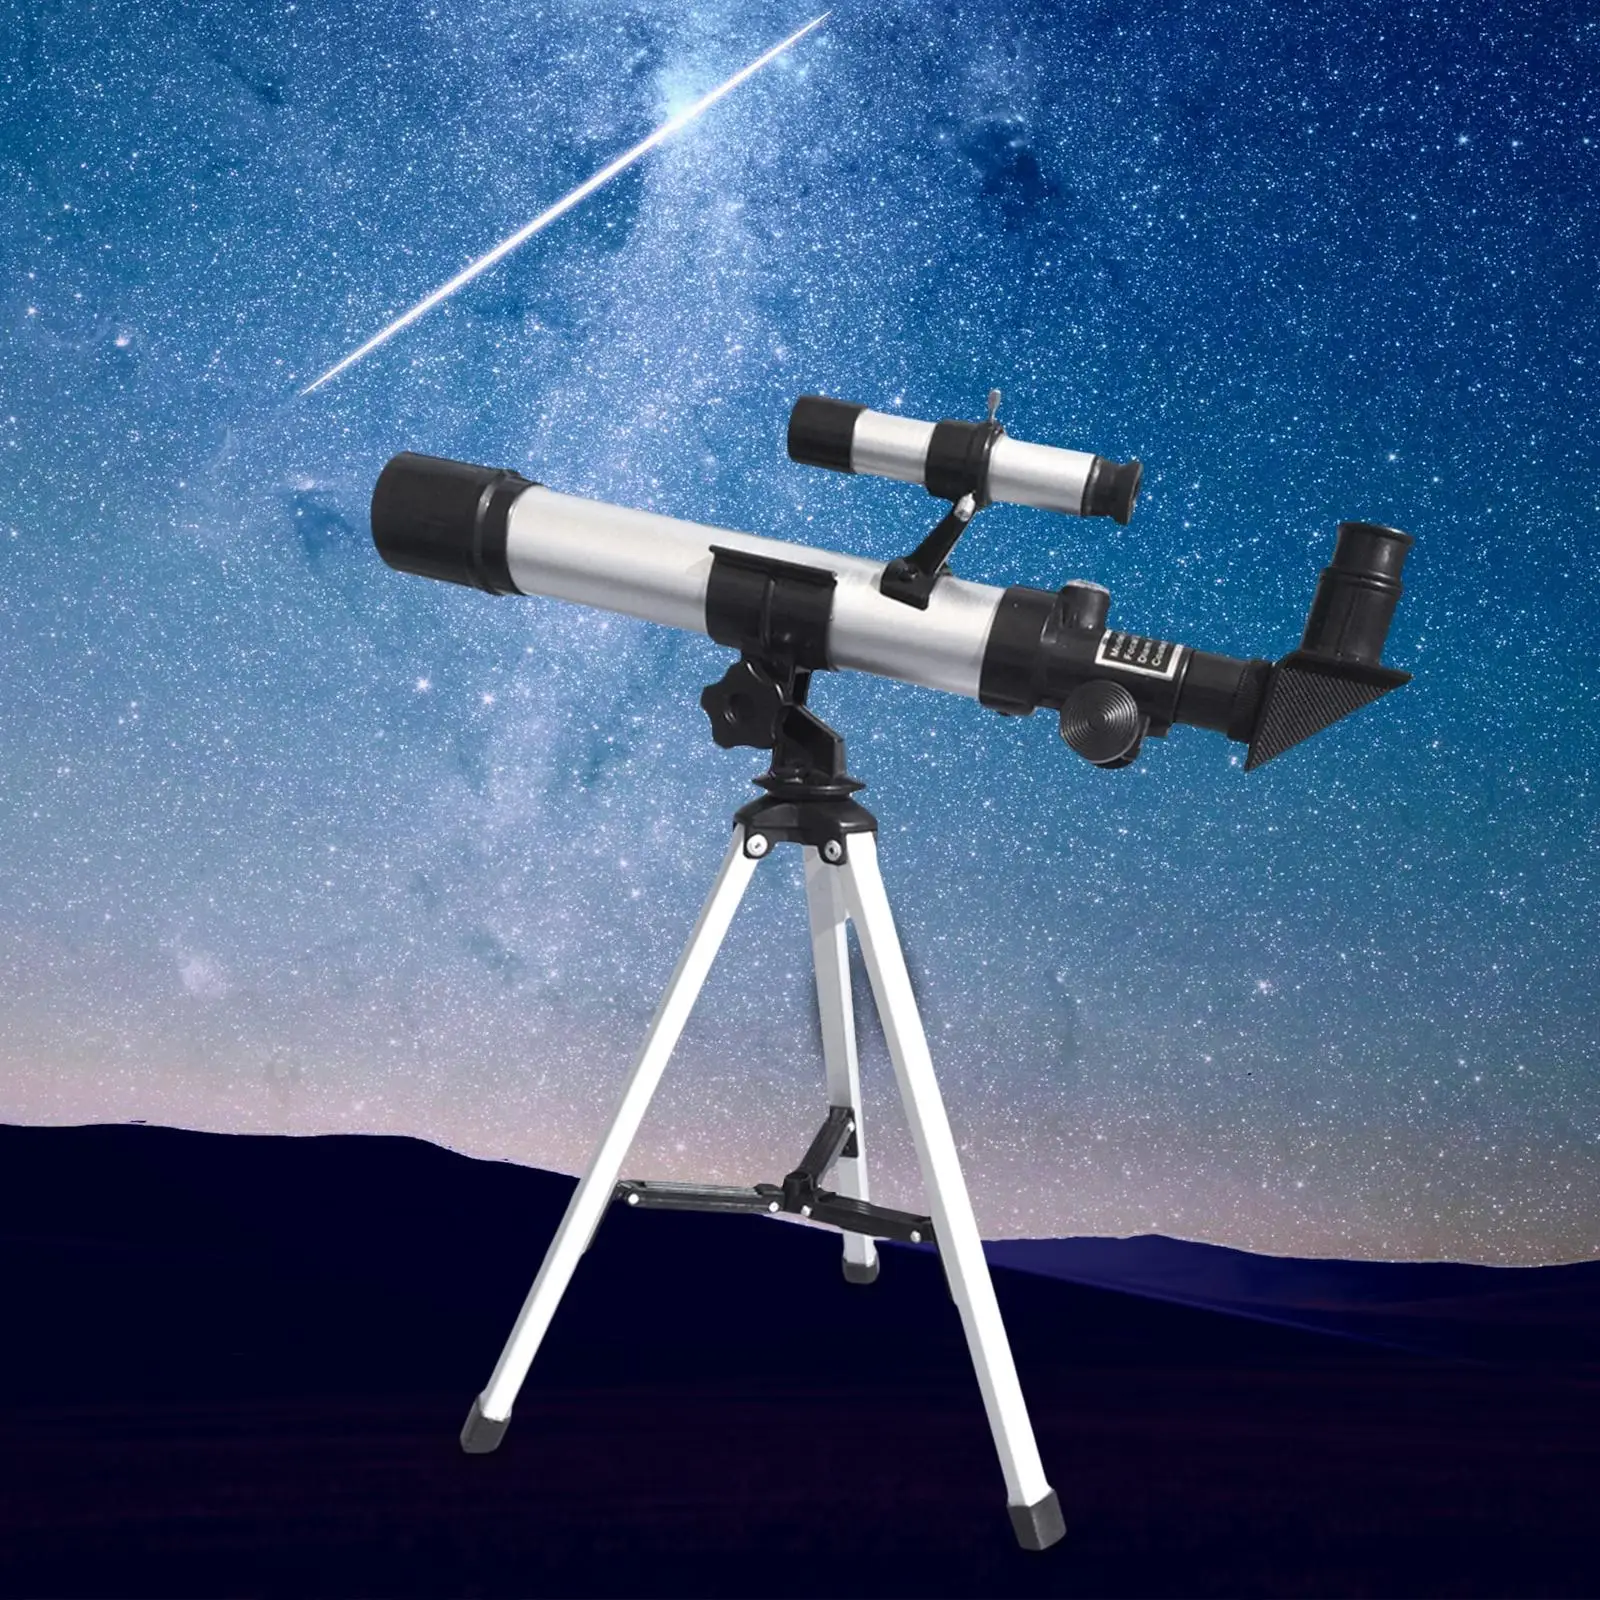 Kids Astronomical Telescope 40mm Objective Lens 400400 for Beginners